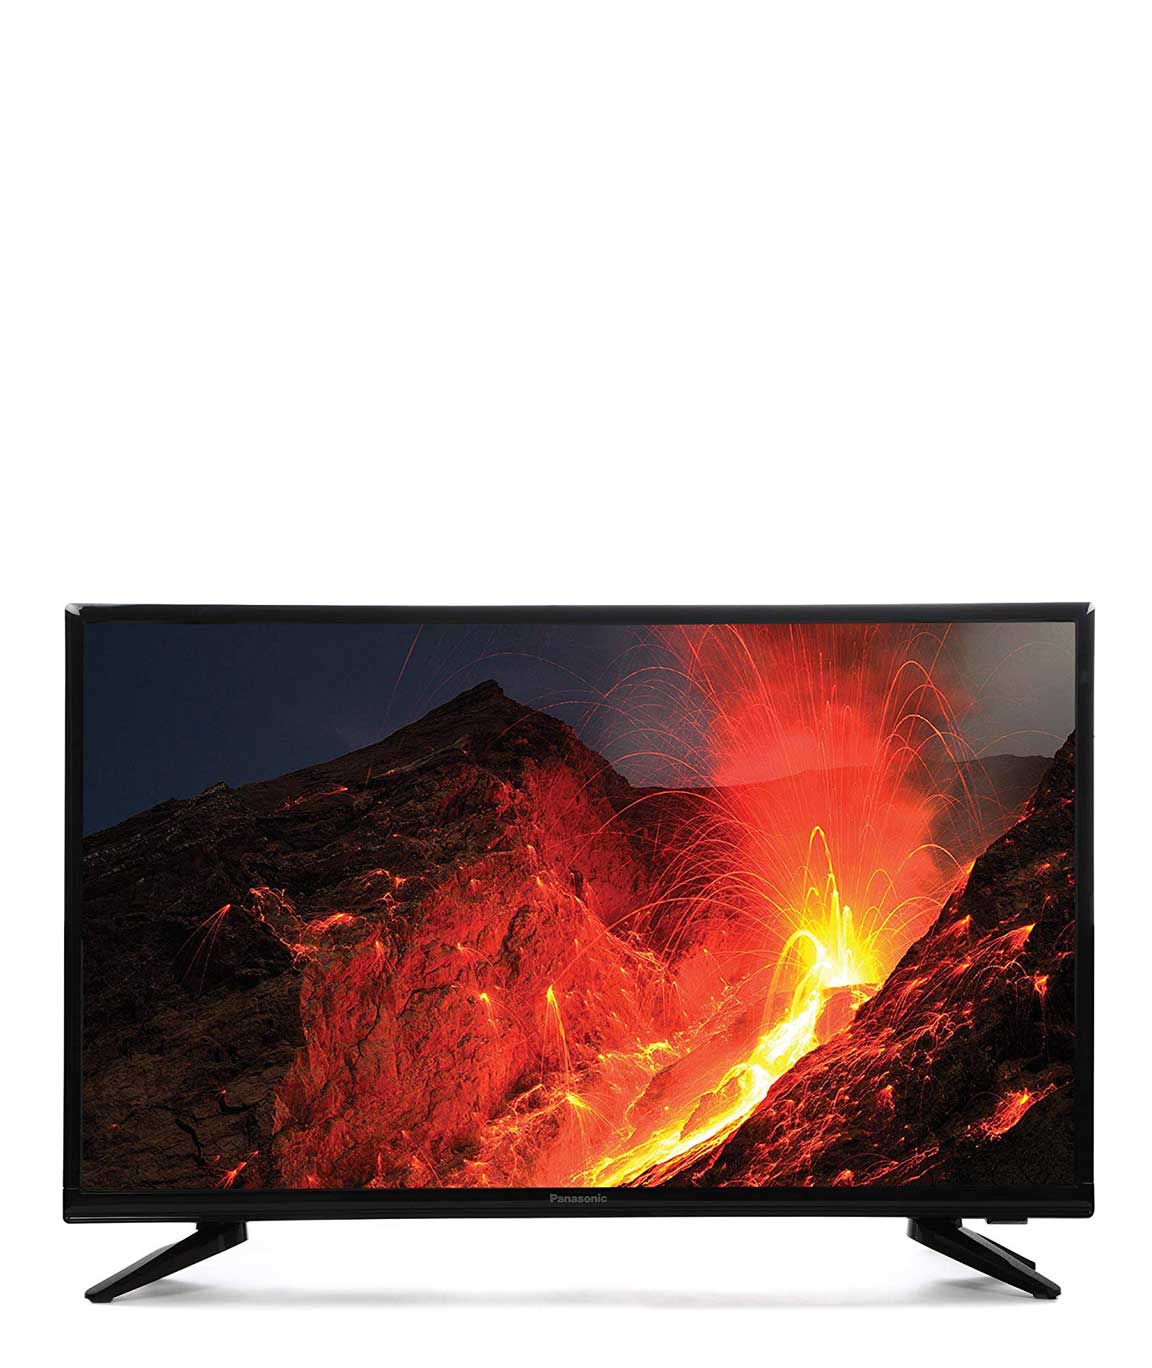 impliciet Overeenstemming gemakkelijk Panasonic 70 cm (28 Inches) HD Ready LED TV TH- 28F200DX (Black) (2018  model)